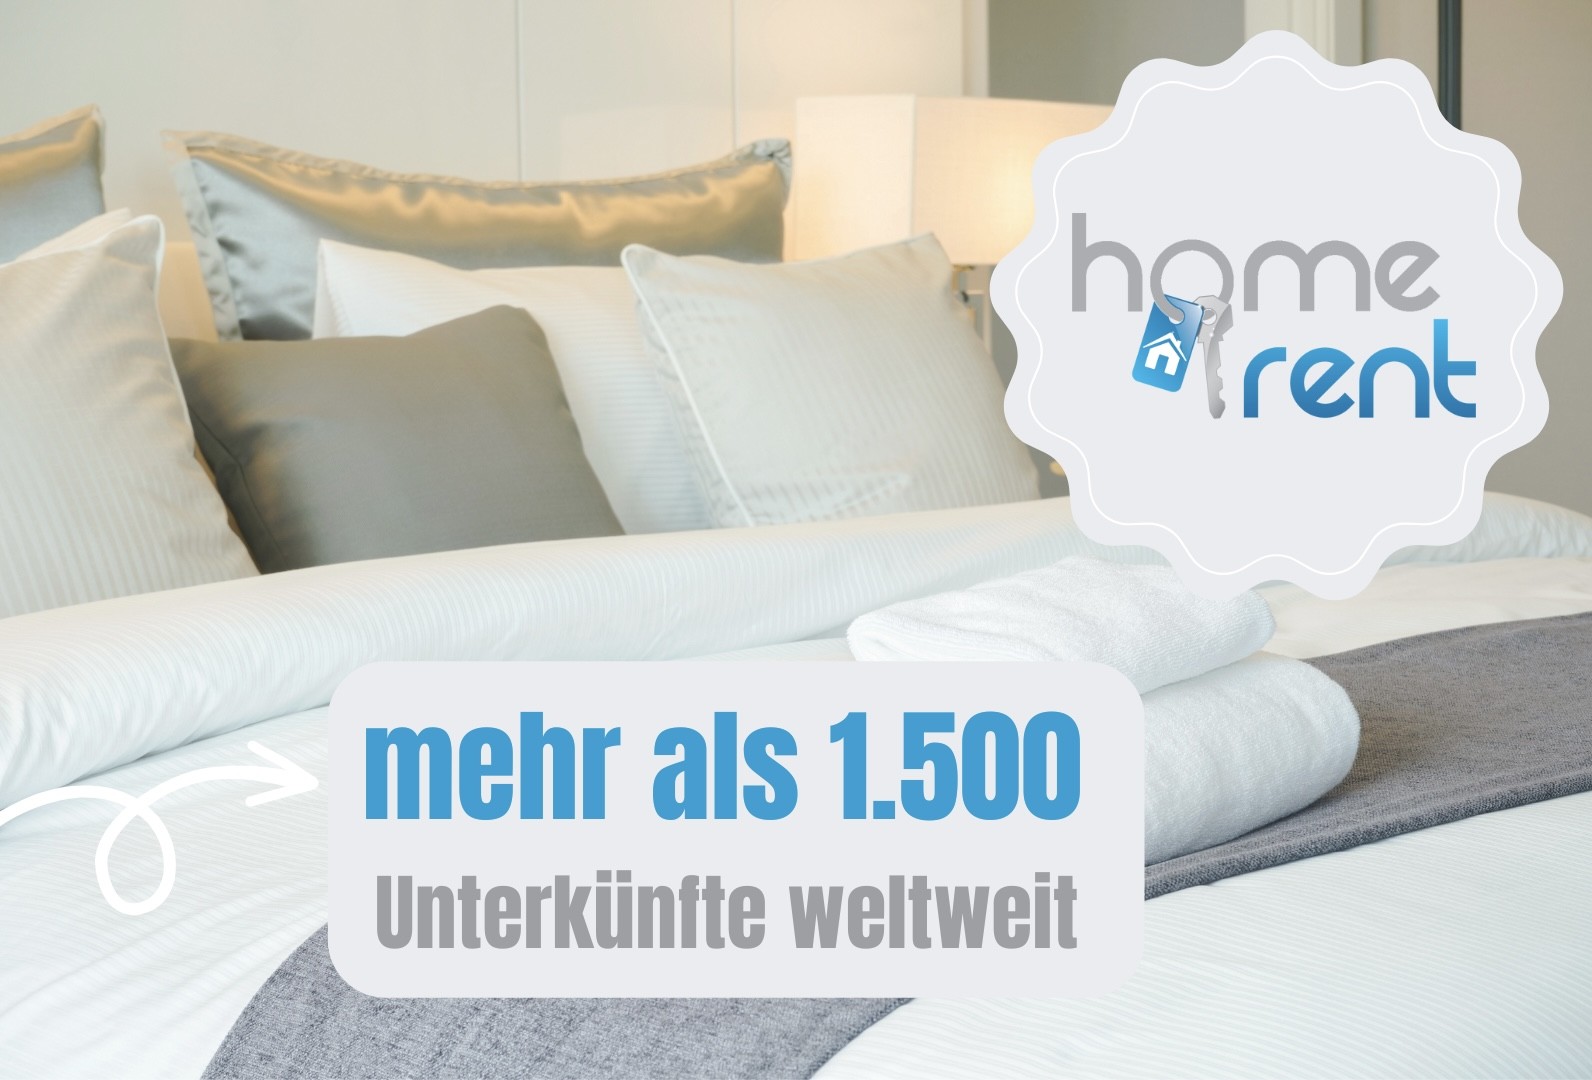 Ferienwohnungen Homerent bei Ingolstadt inkl. WLAN Homerent Immobilien GmbH 85049 169163803064d4590e47556